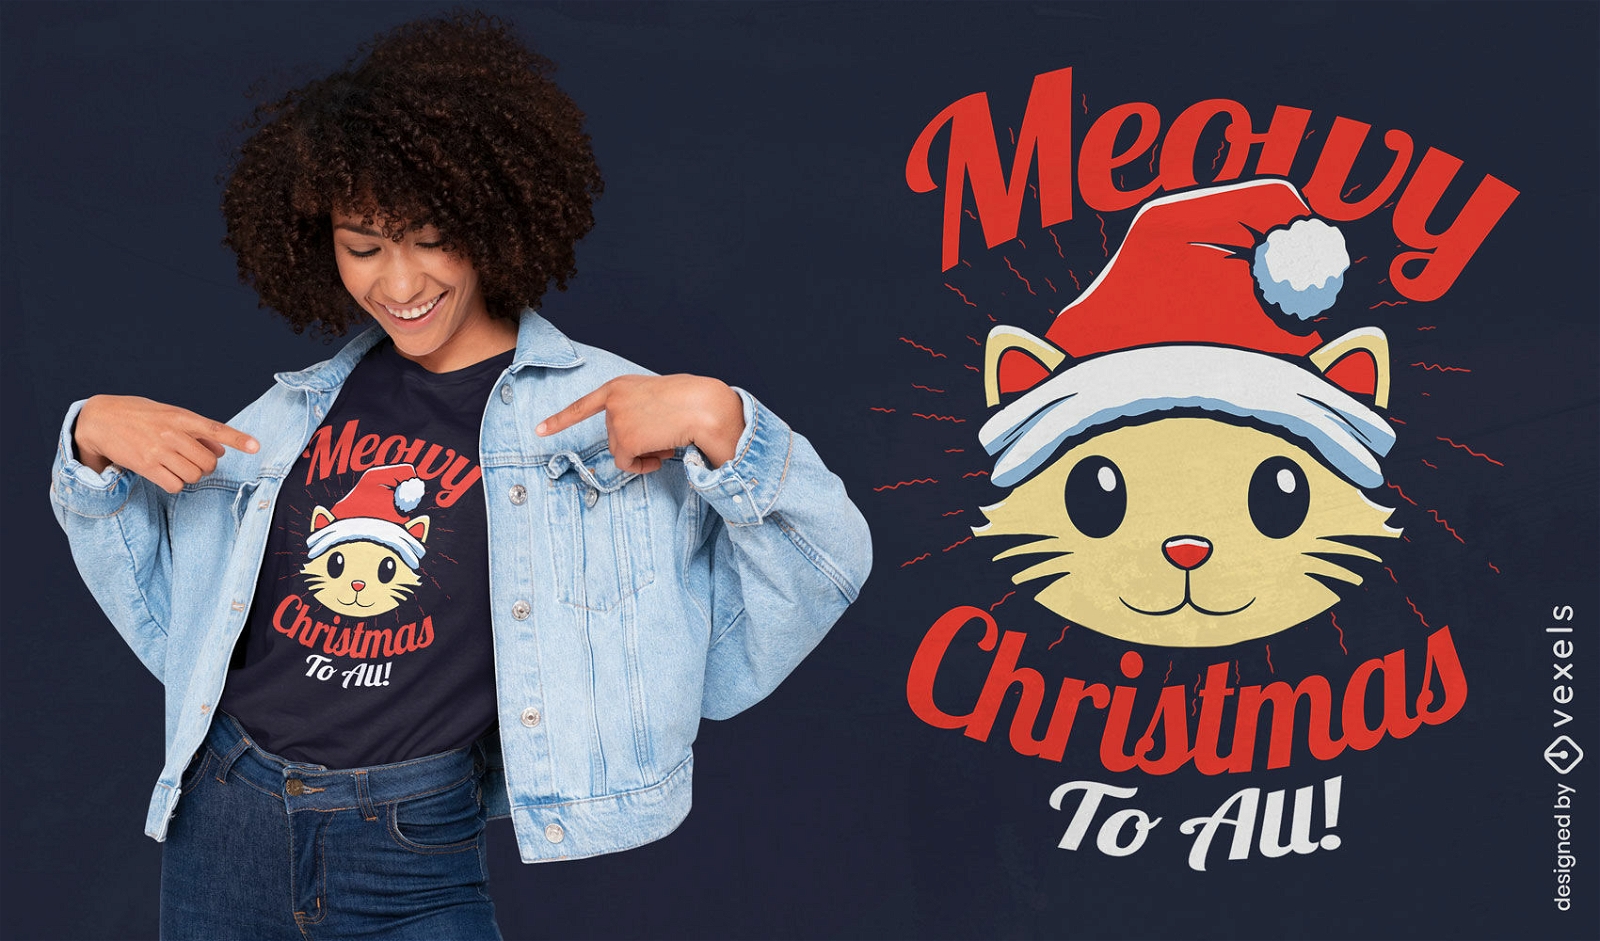 Cute Christmas cat pun t-shirt design